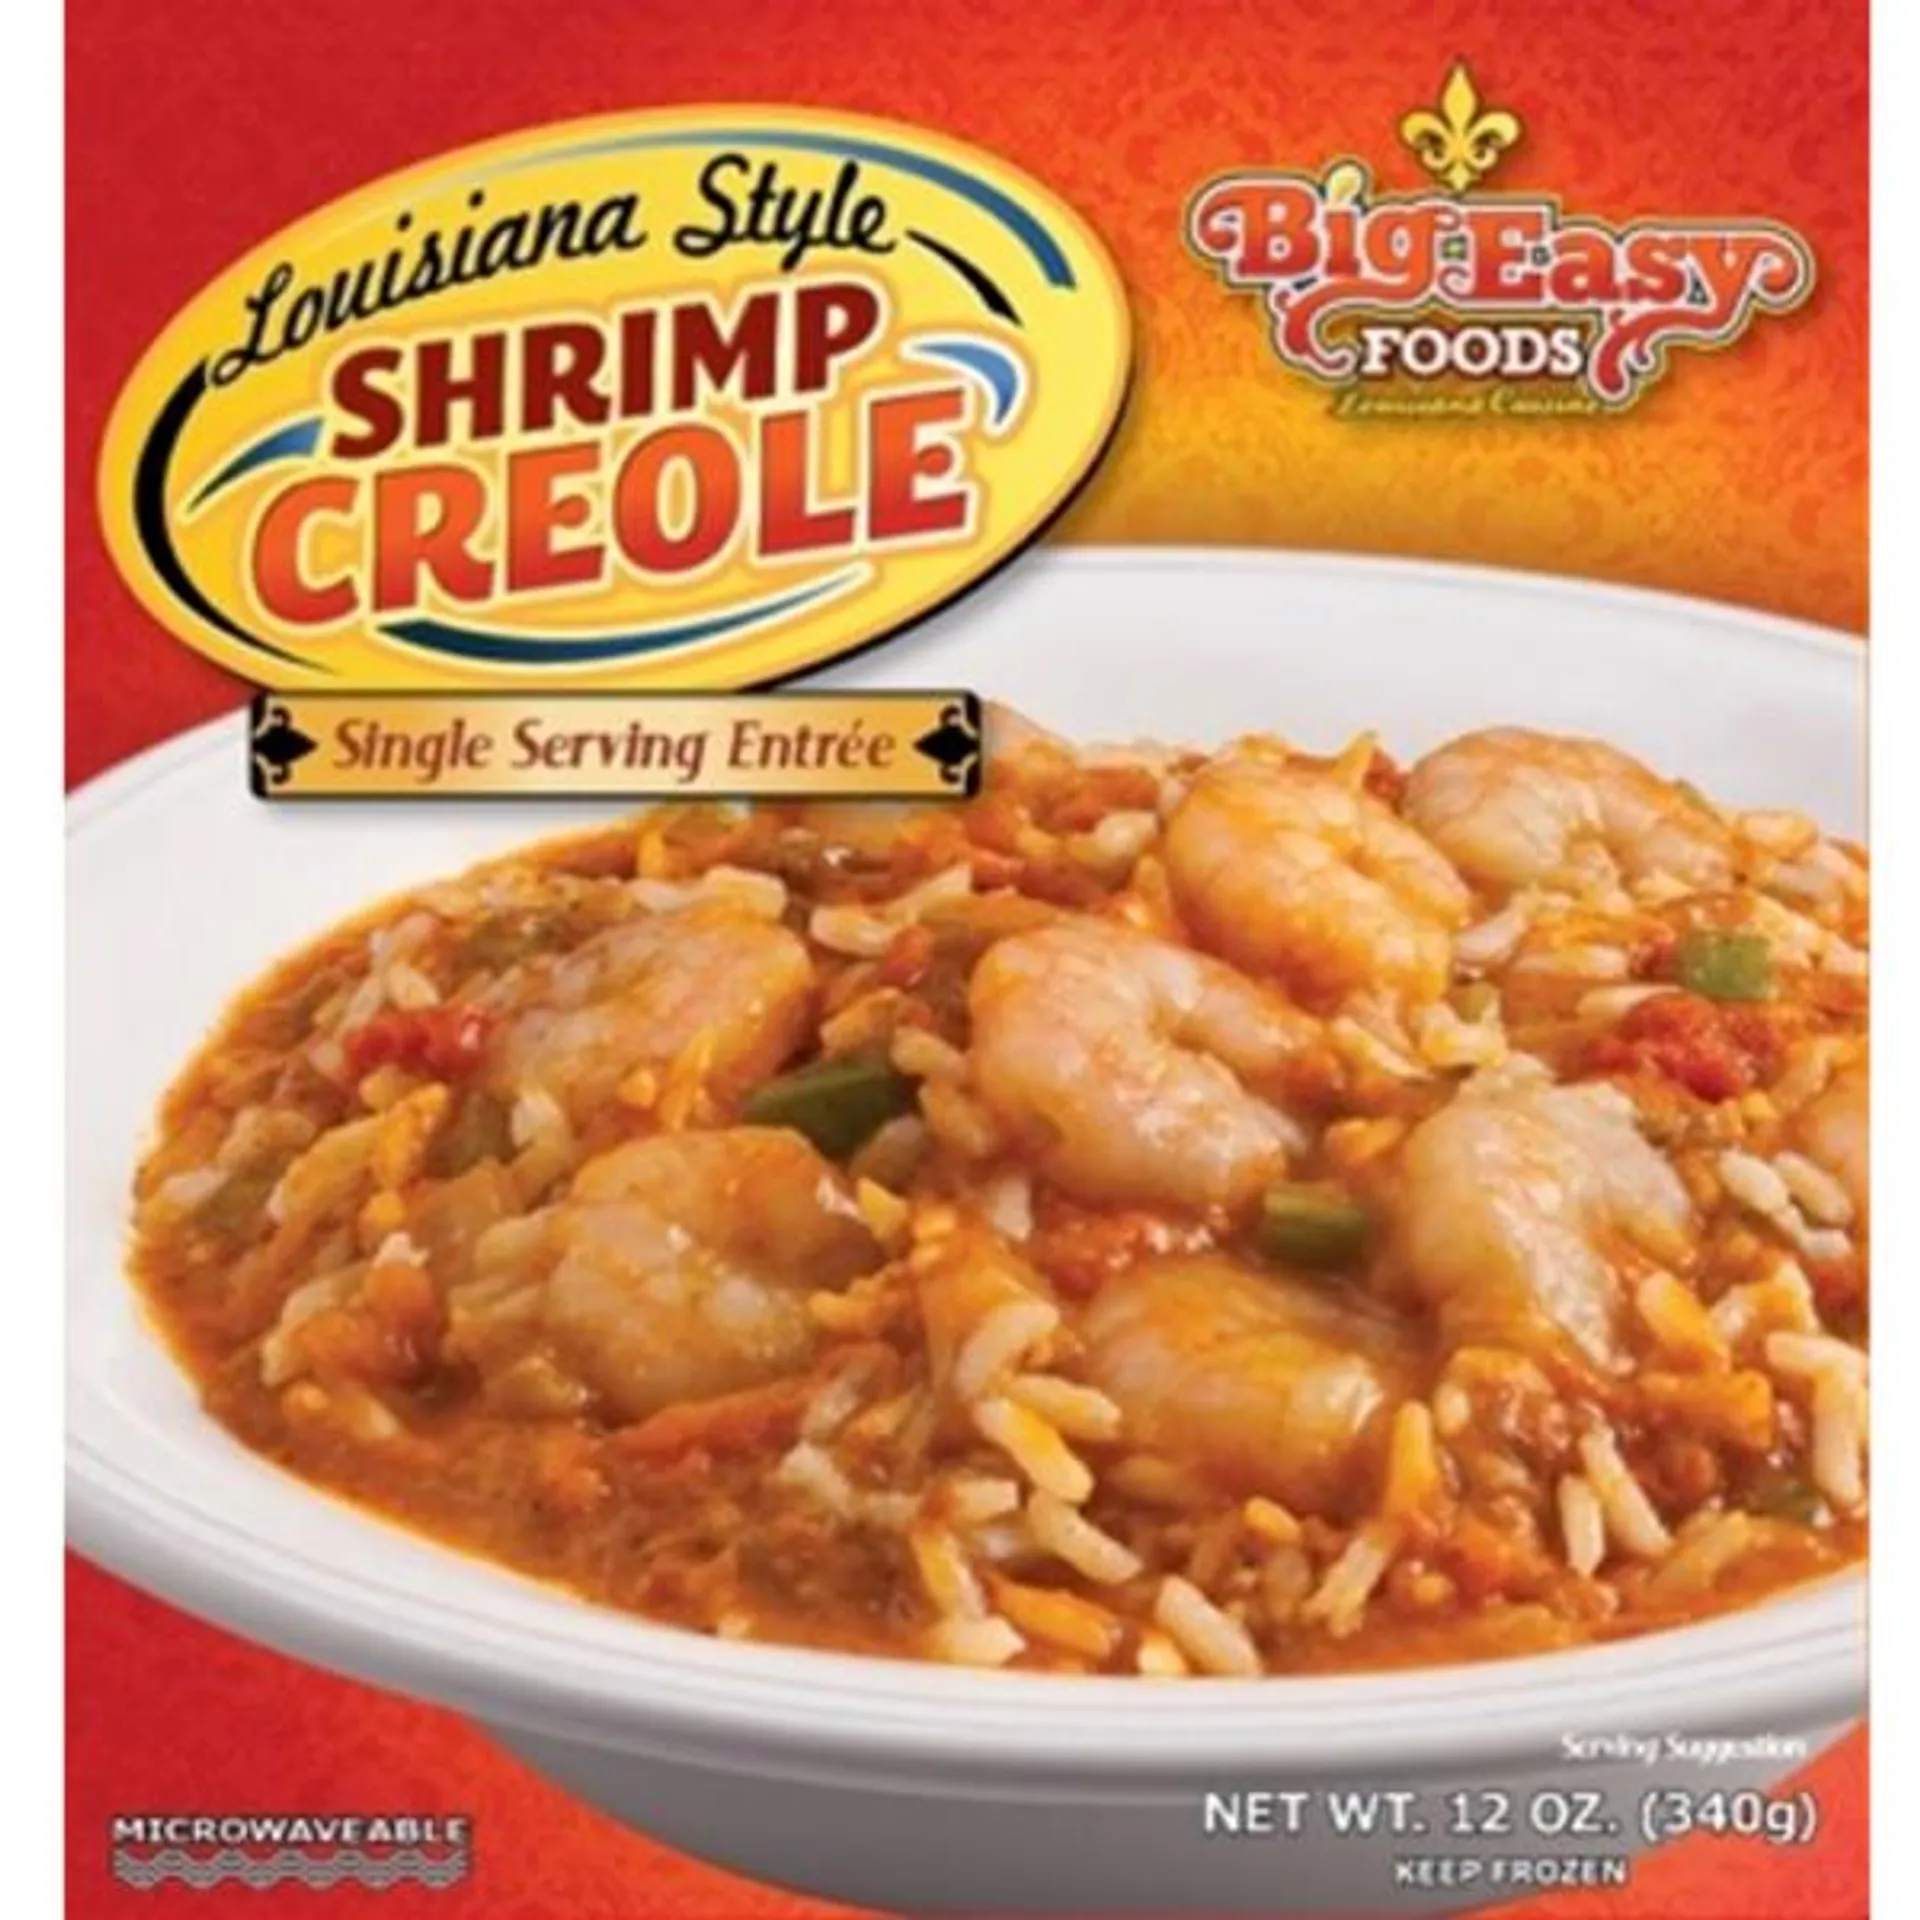 Big Easy Foods Shrimp Creole